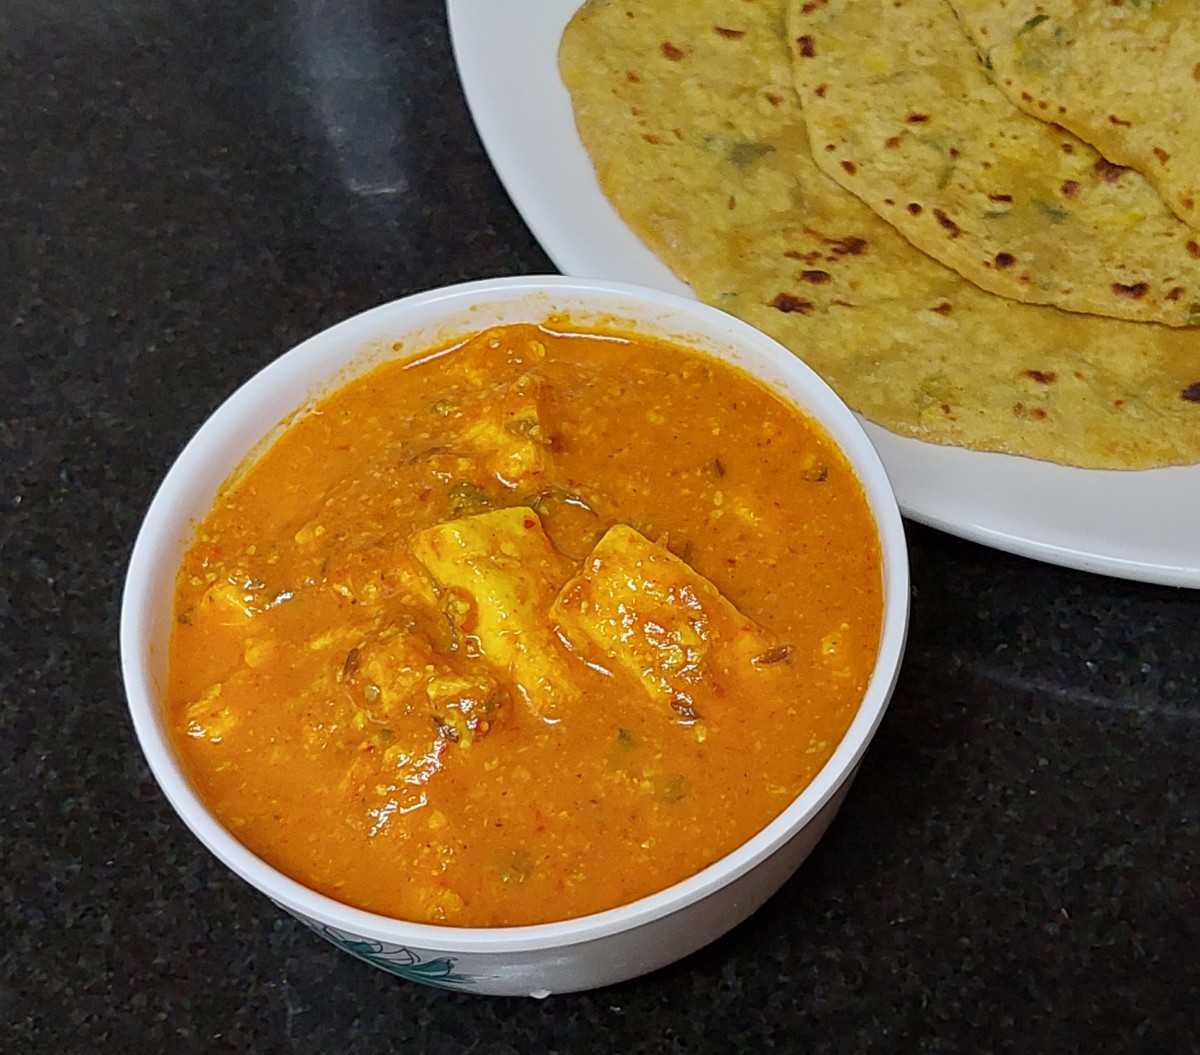 Garnish with grated paneer and cream. Serve hot with roti, paratha, chapati, naan, phulka or flavored rice. Enjoy!